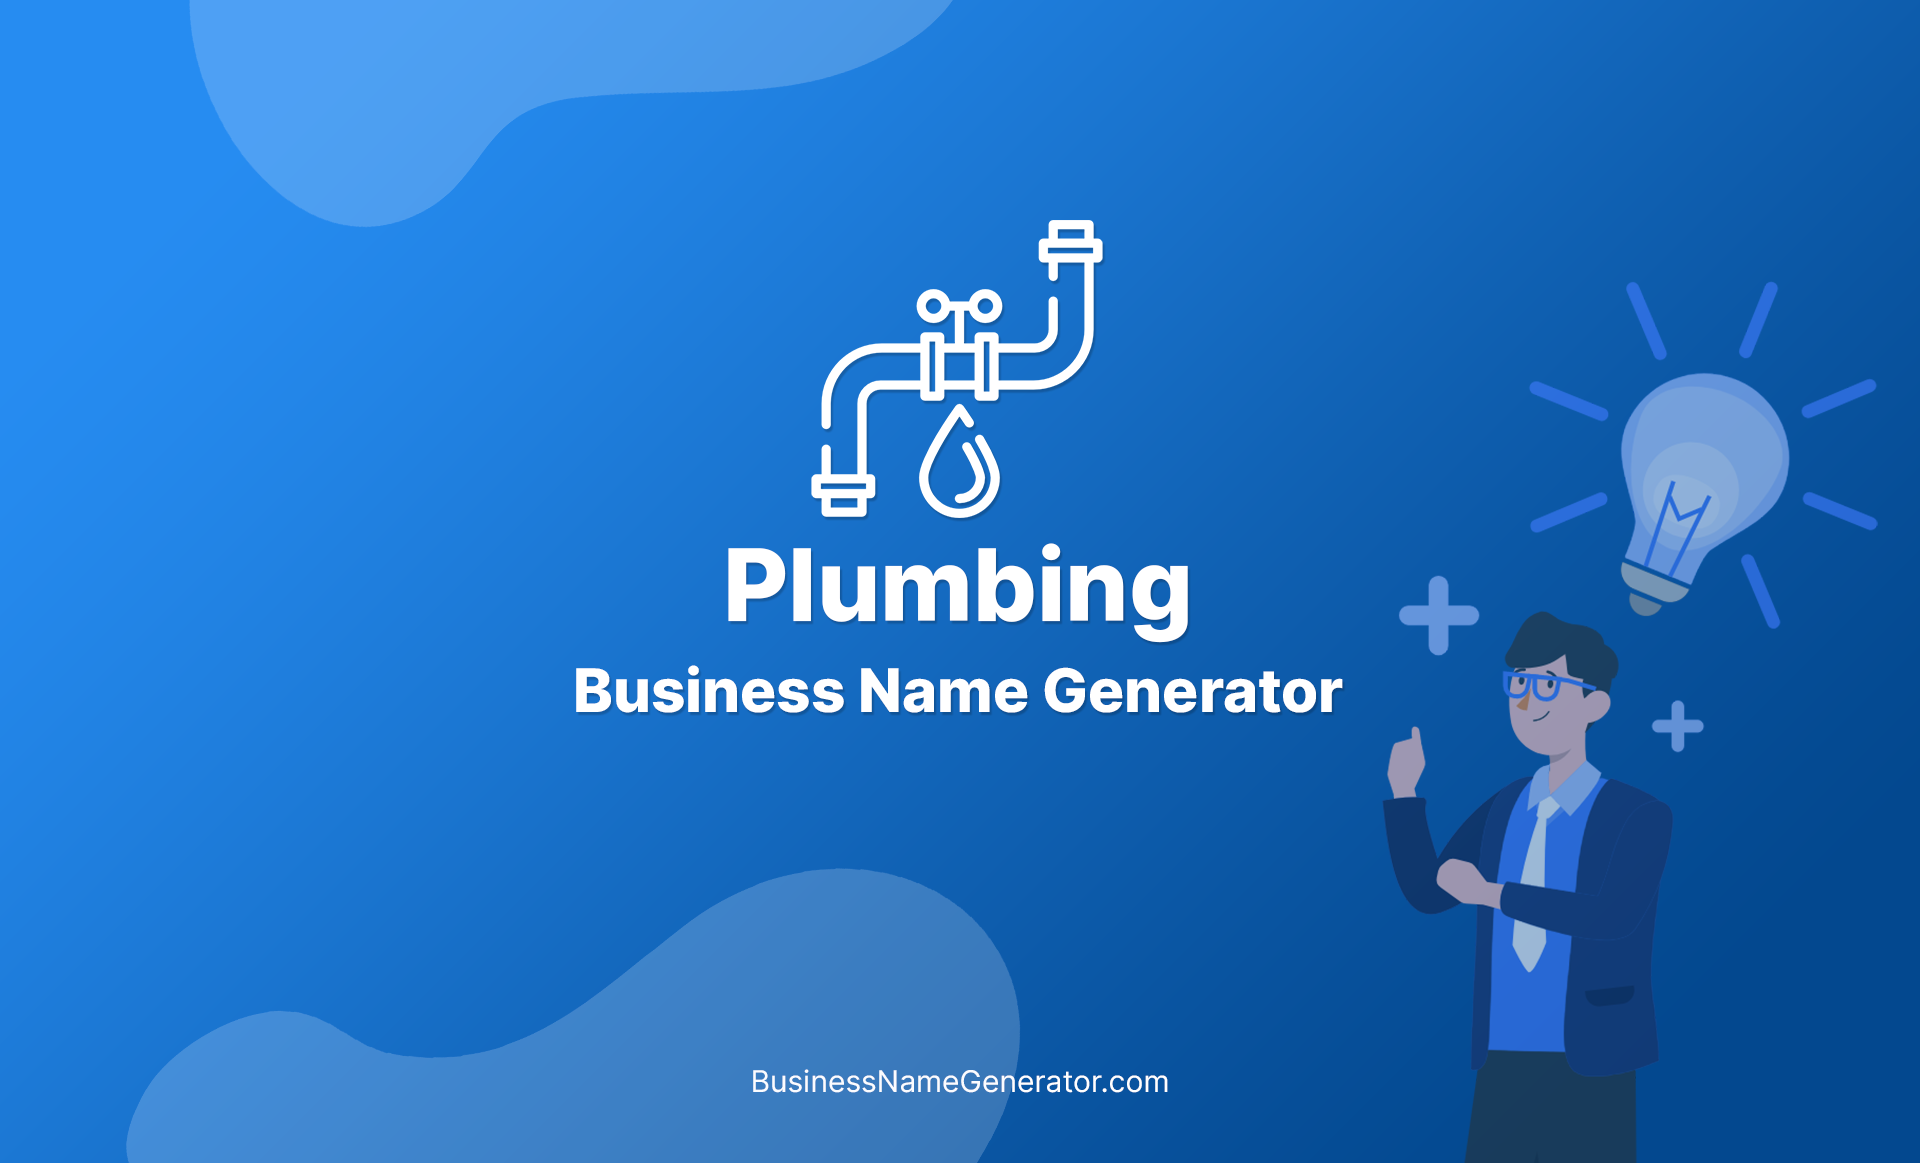 Plumbing Business Name Generator